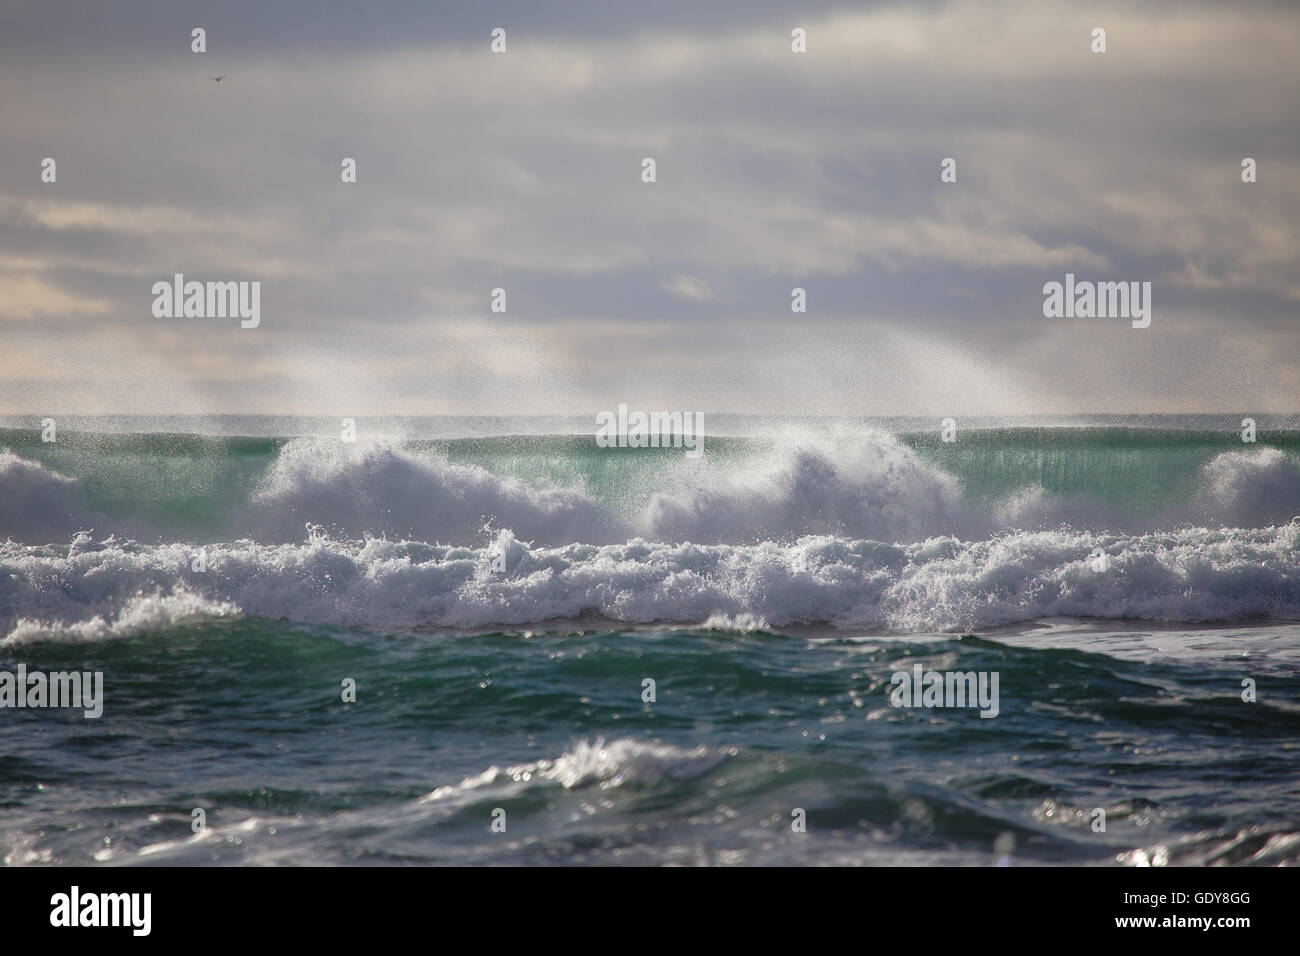 Onde del Nord Oceano atlantico si infrangono su una spiaggia islandese dopo una tempesta Foto Stock